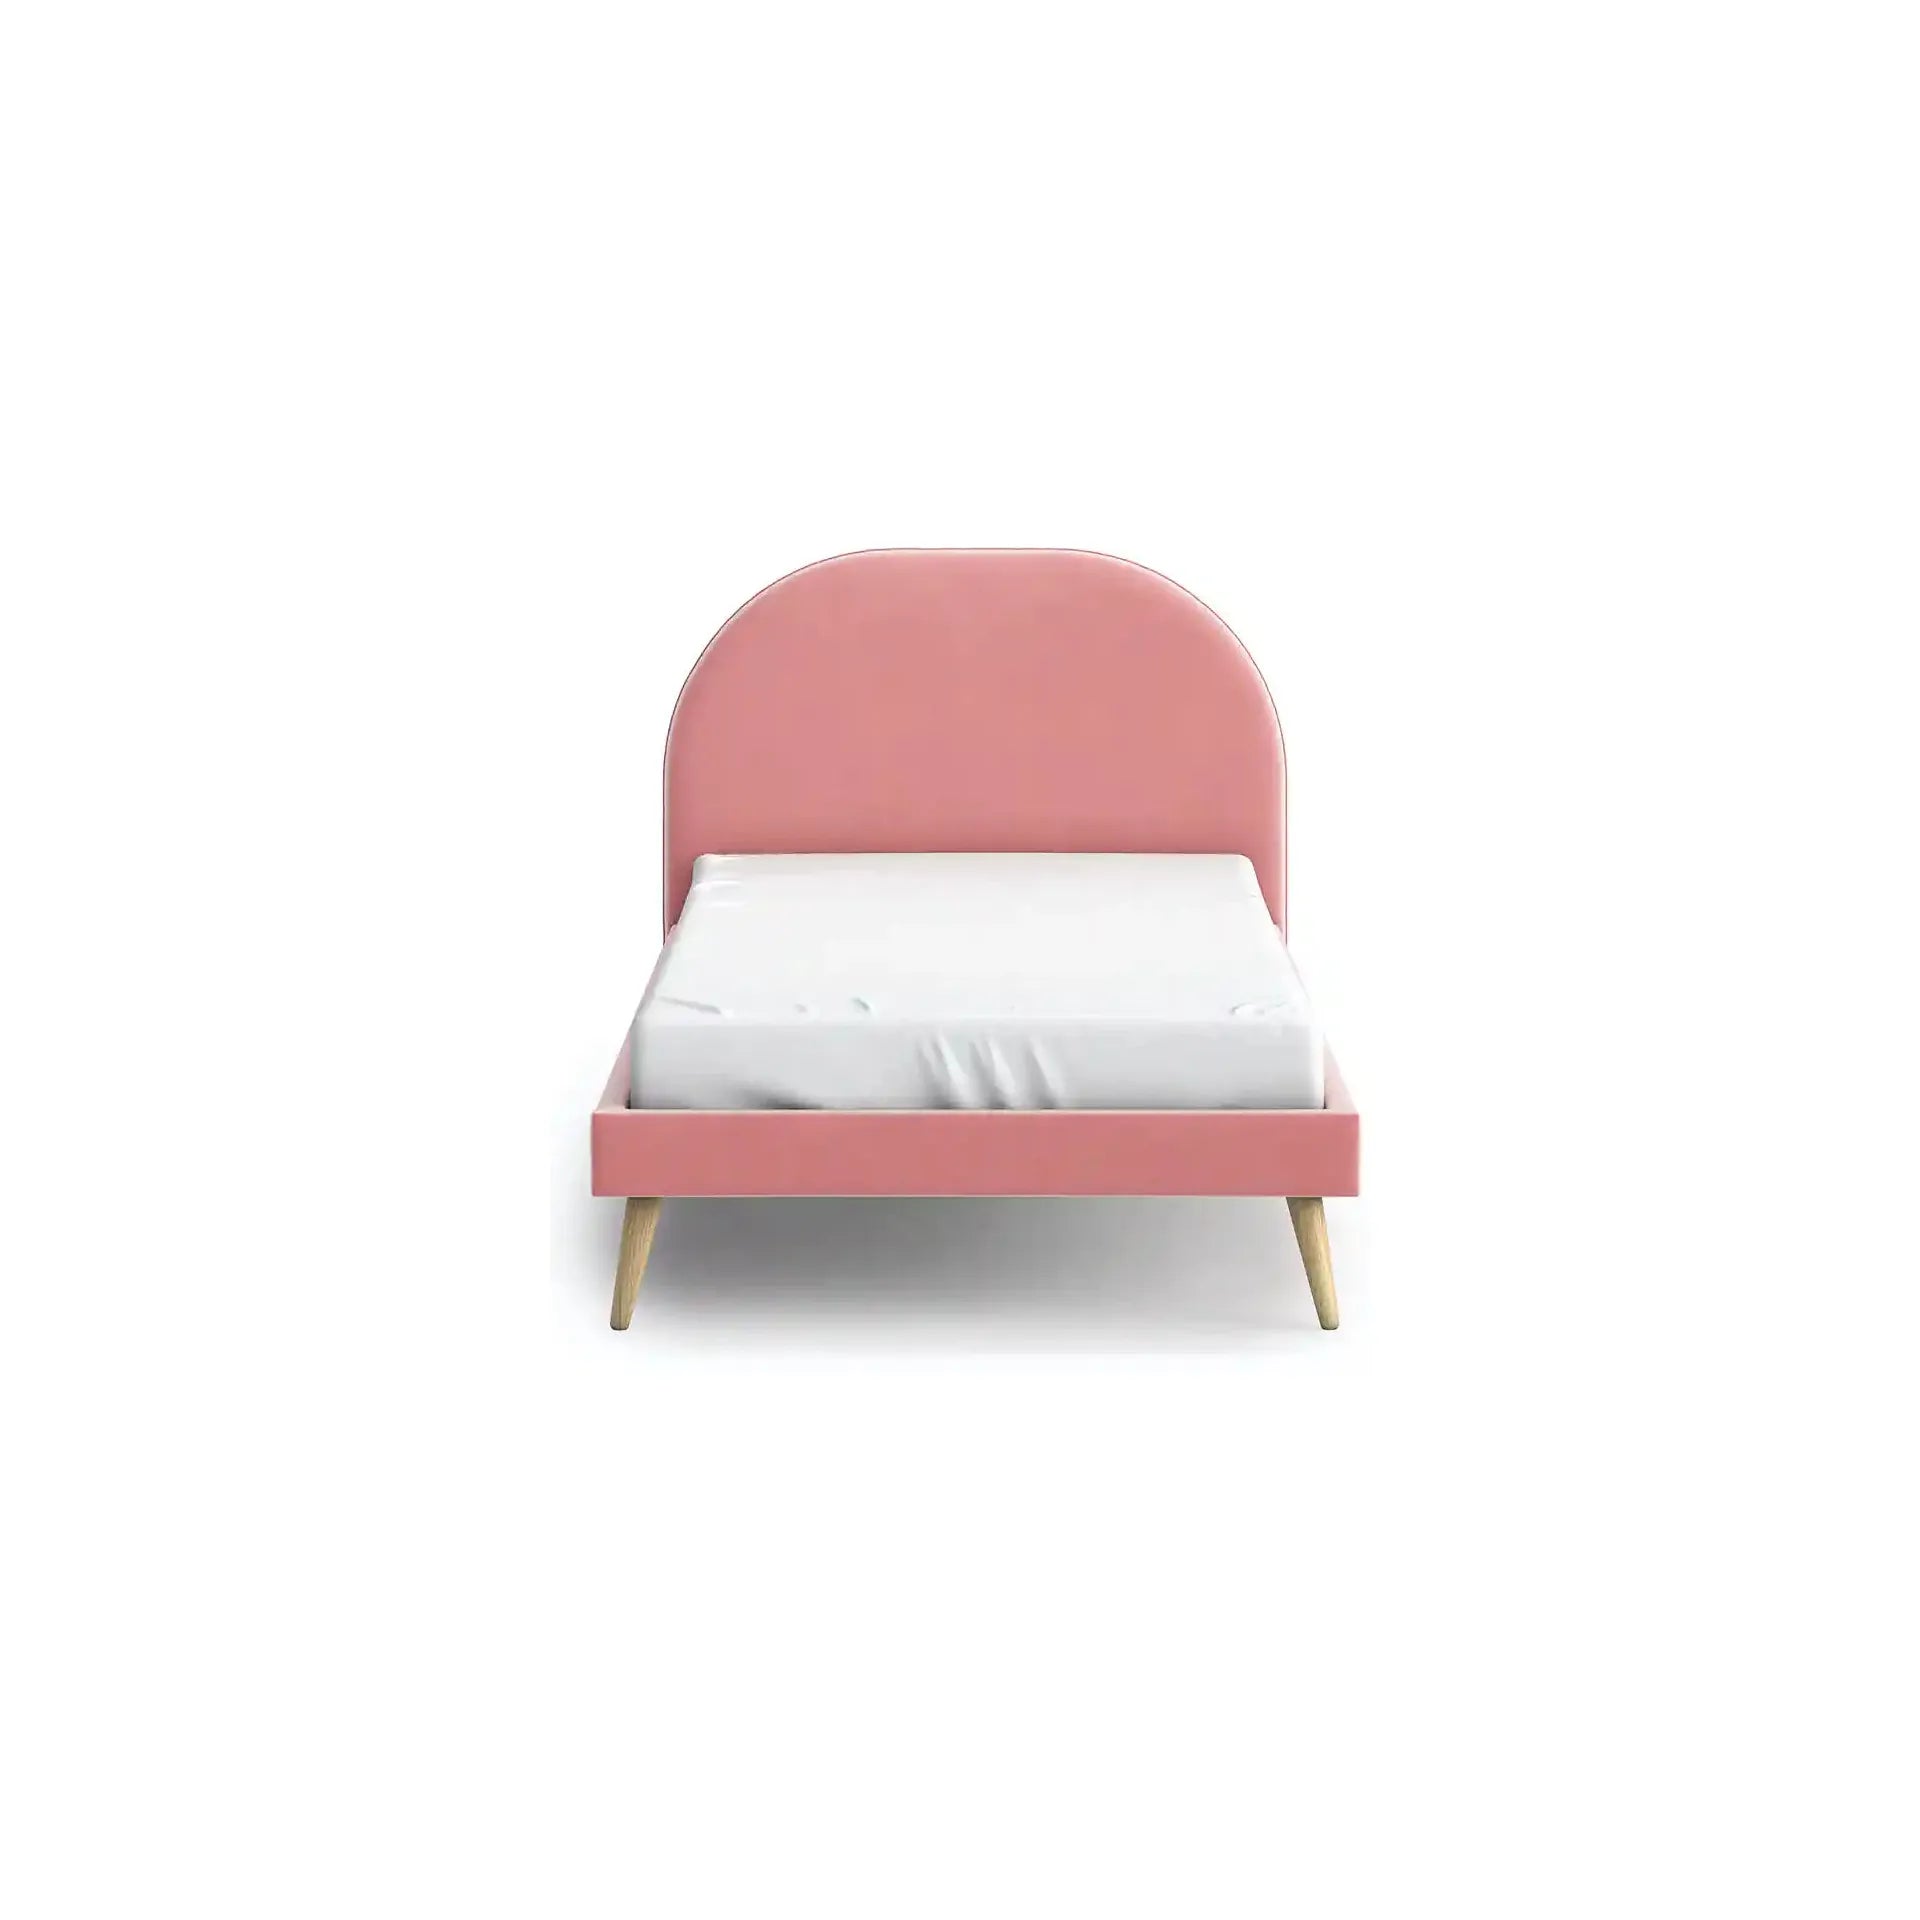 MOLLY lova 90x200cm, rožinė spalva